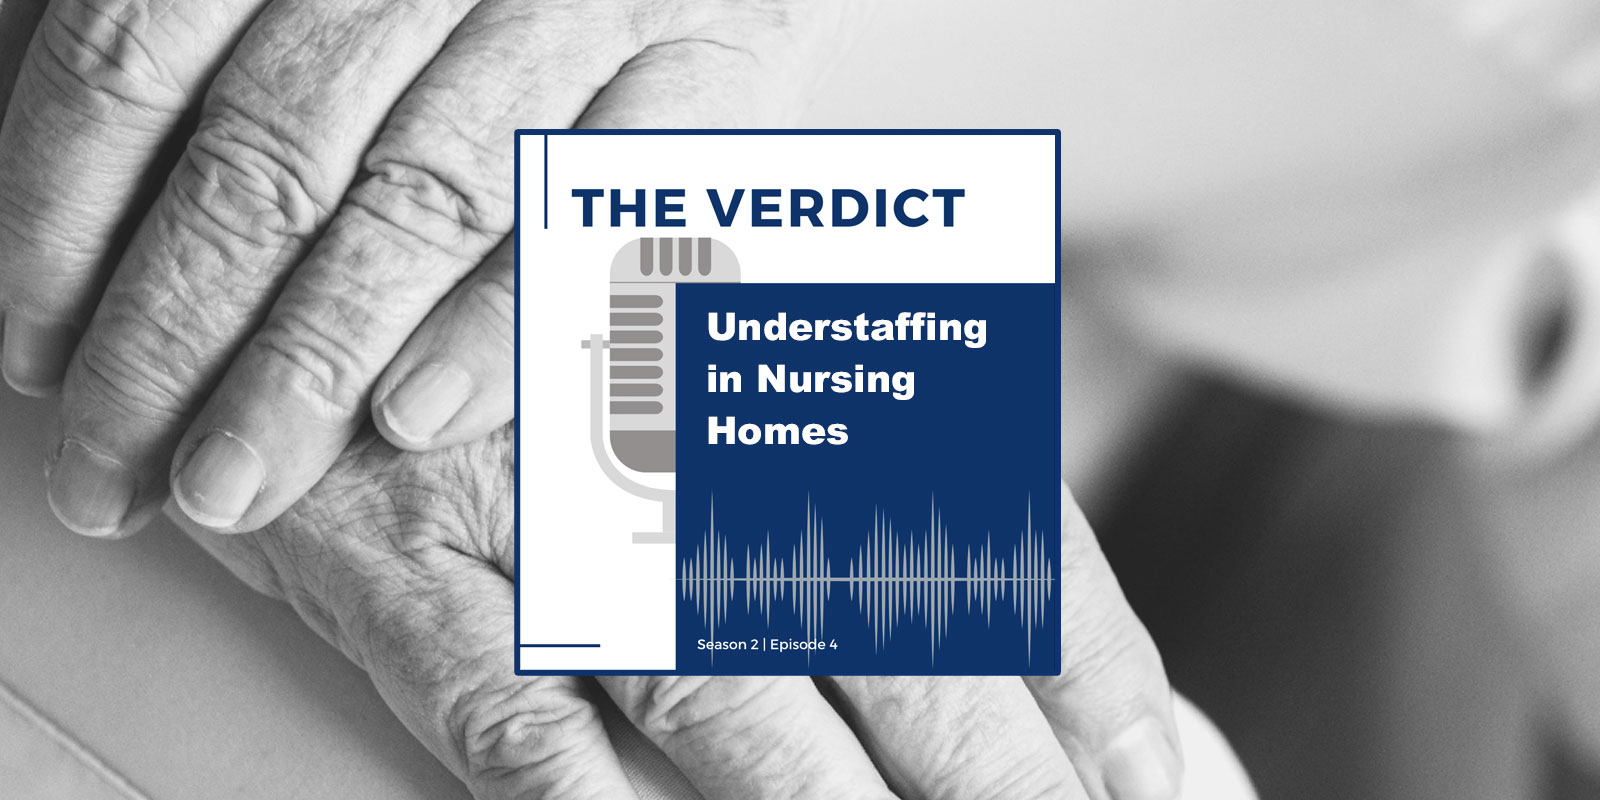 The Verdict Podcast: America's Problem - Understaffing in Nursing Homes